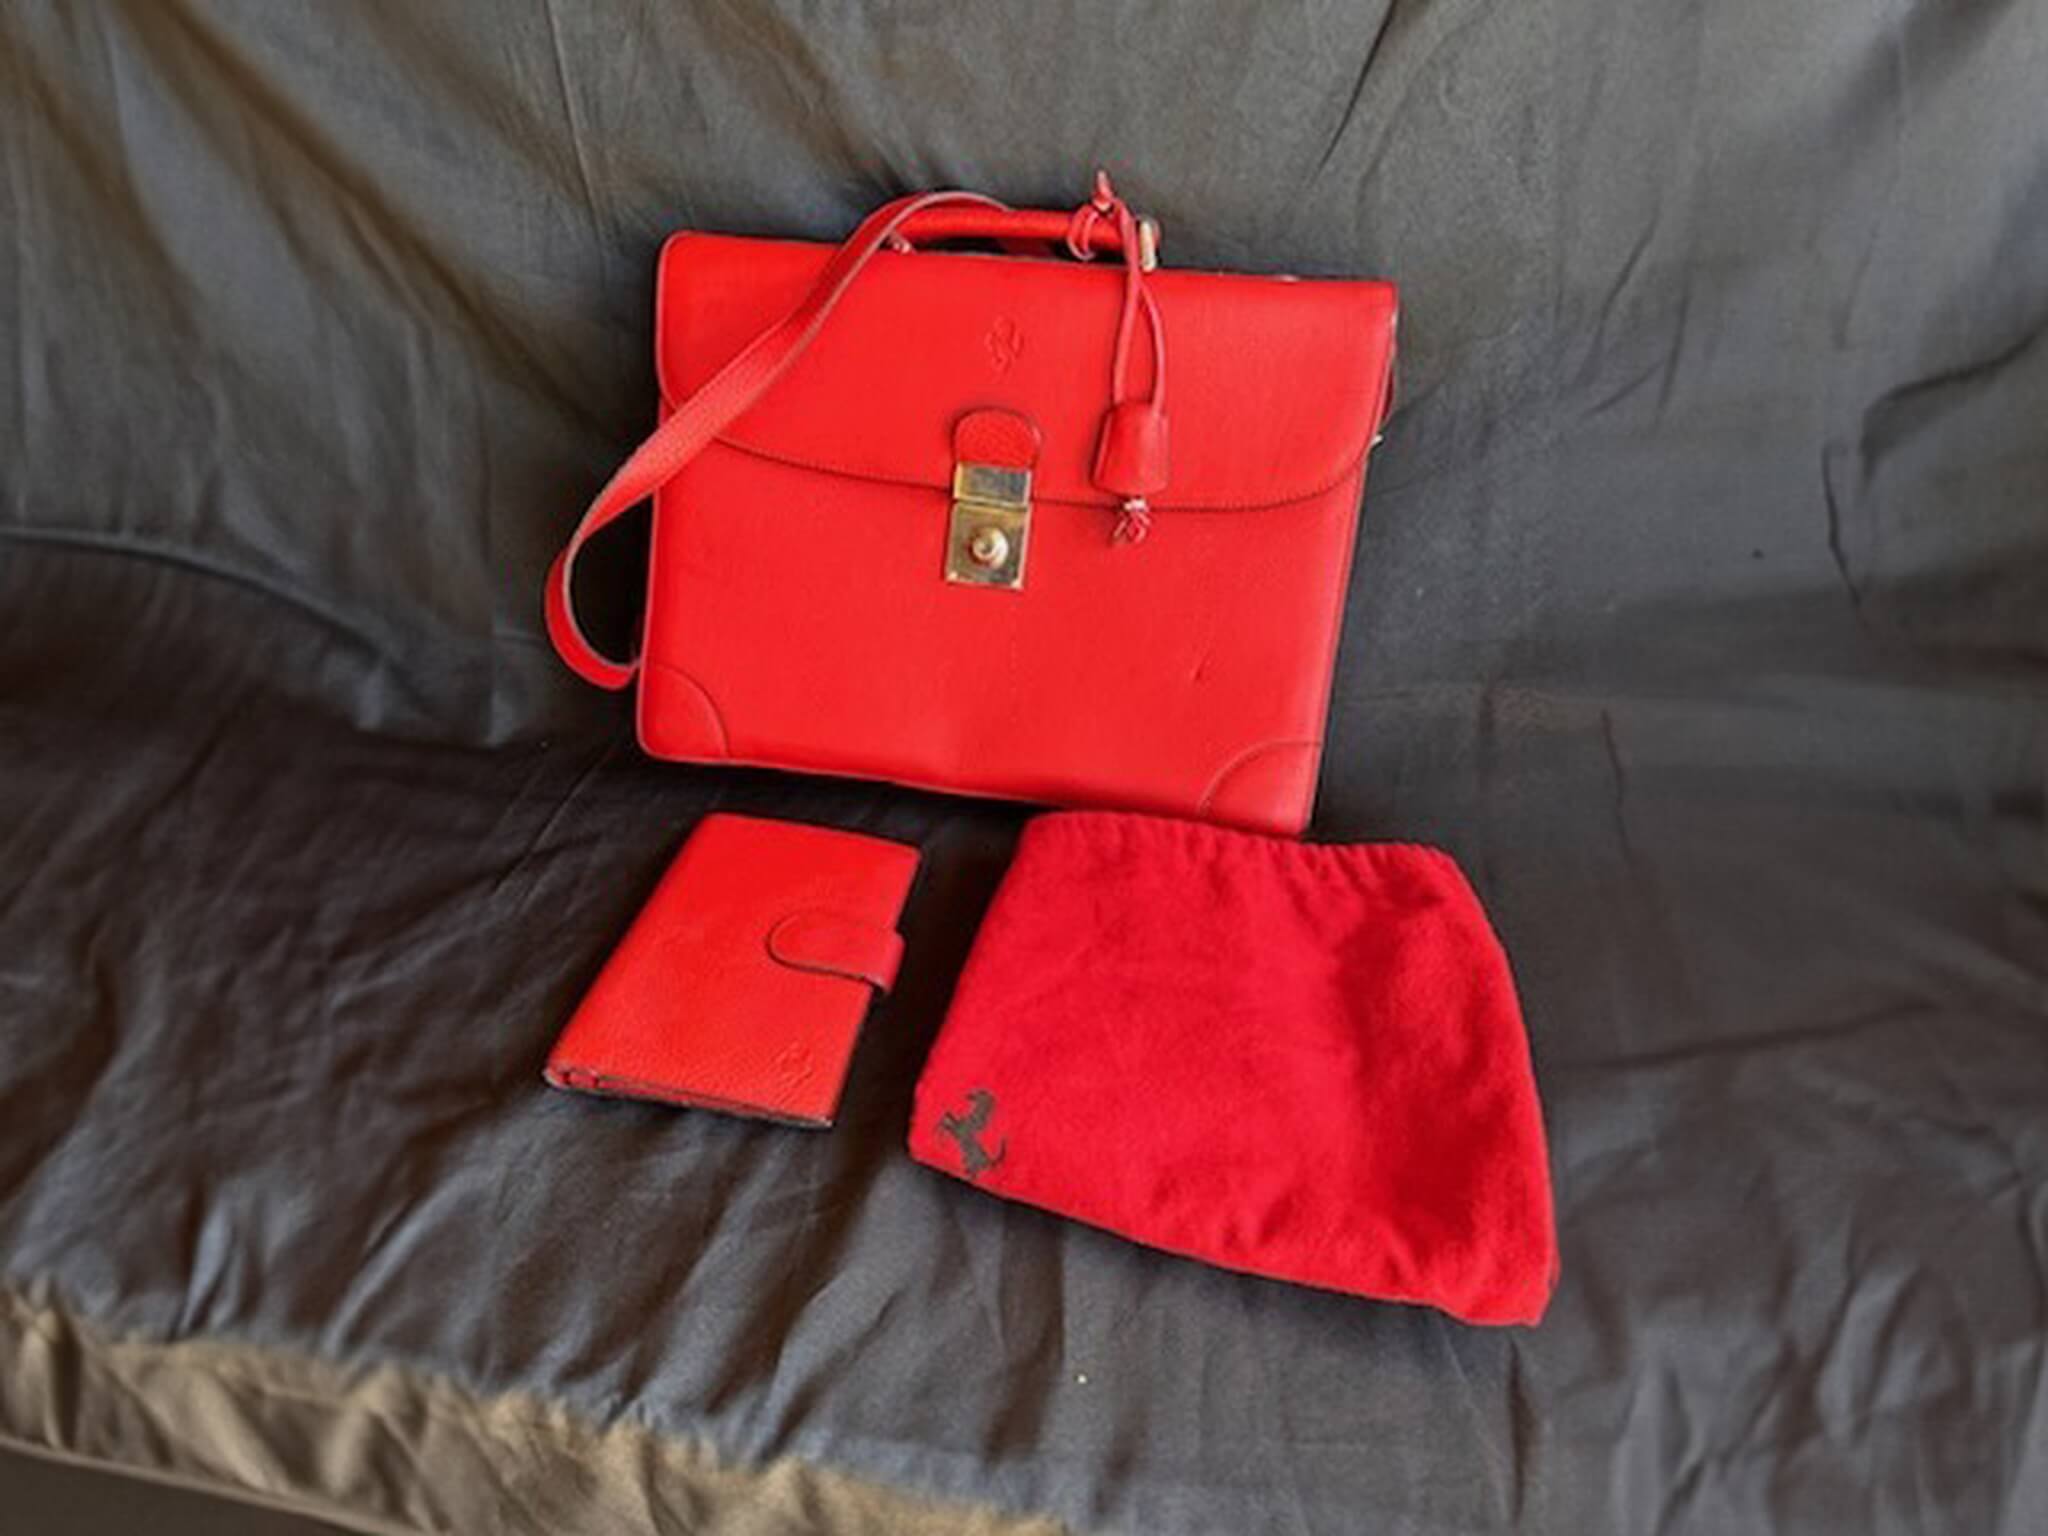 Buy Puma Ferrari Shopper Bag, Women's Medium (Whisper White/Rosso Corsa)  Online at Low Prices in India - Amazon.in